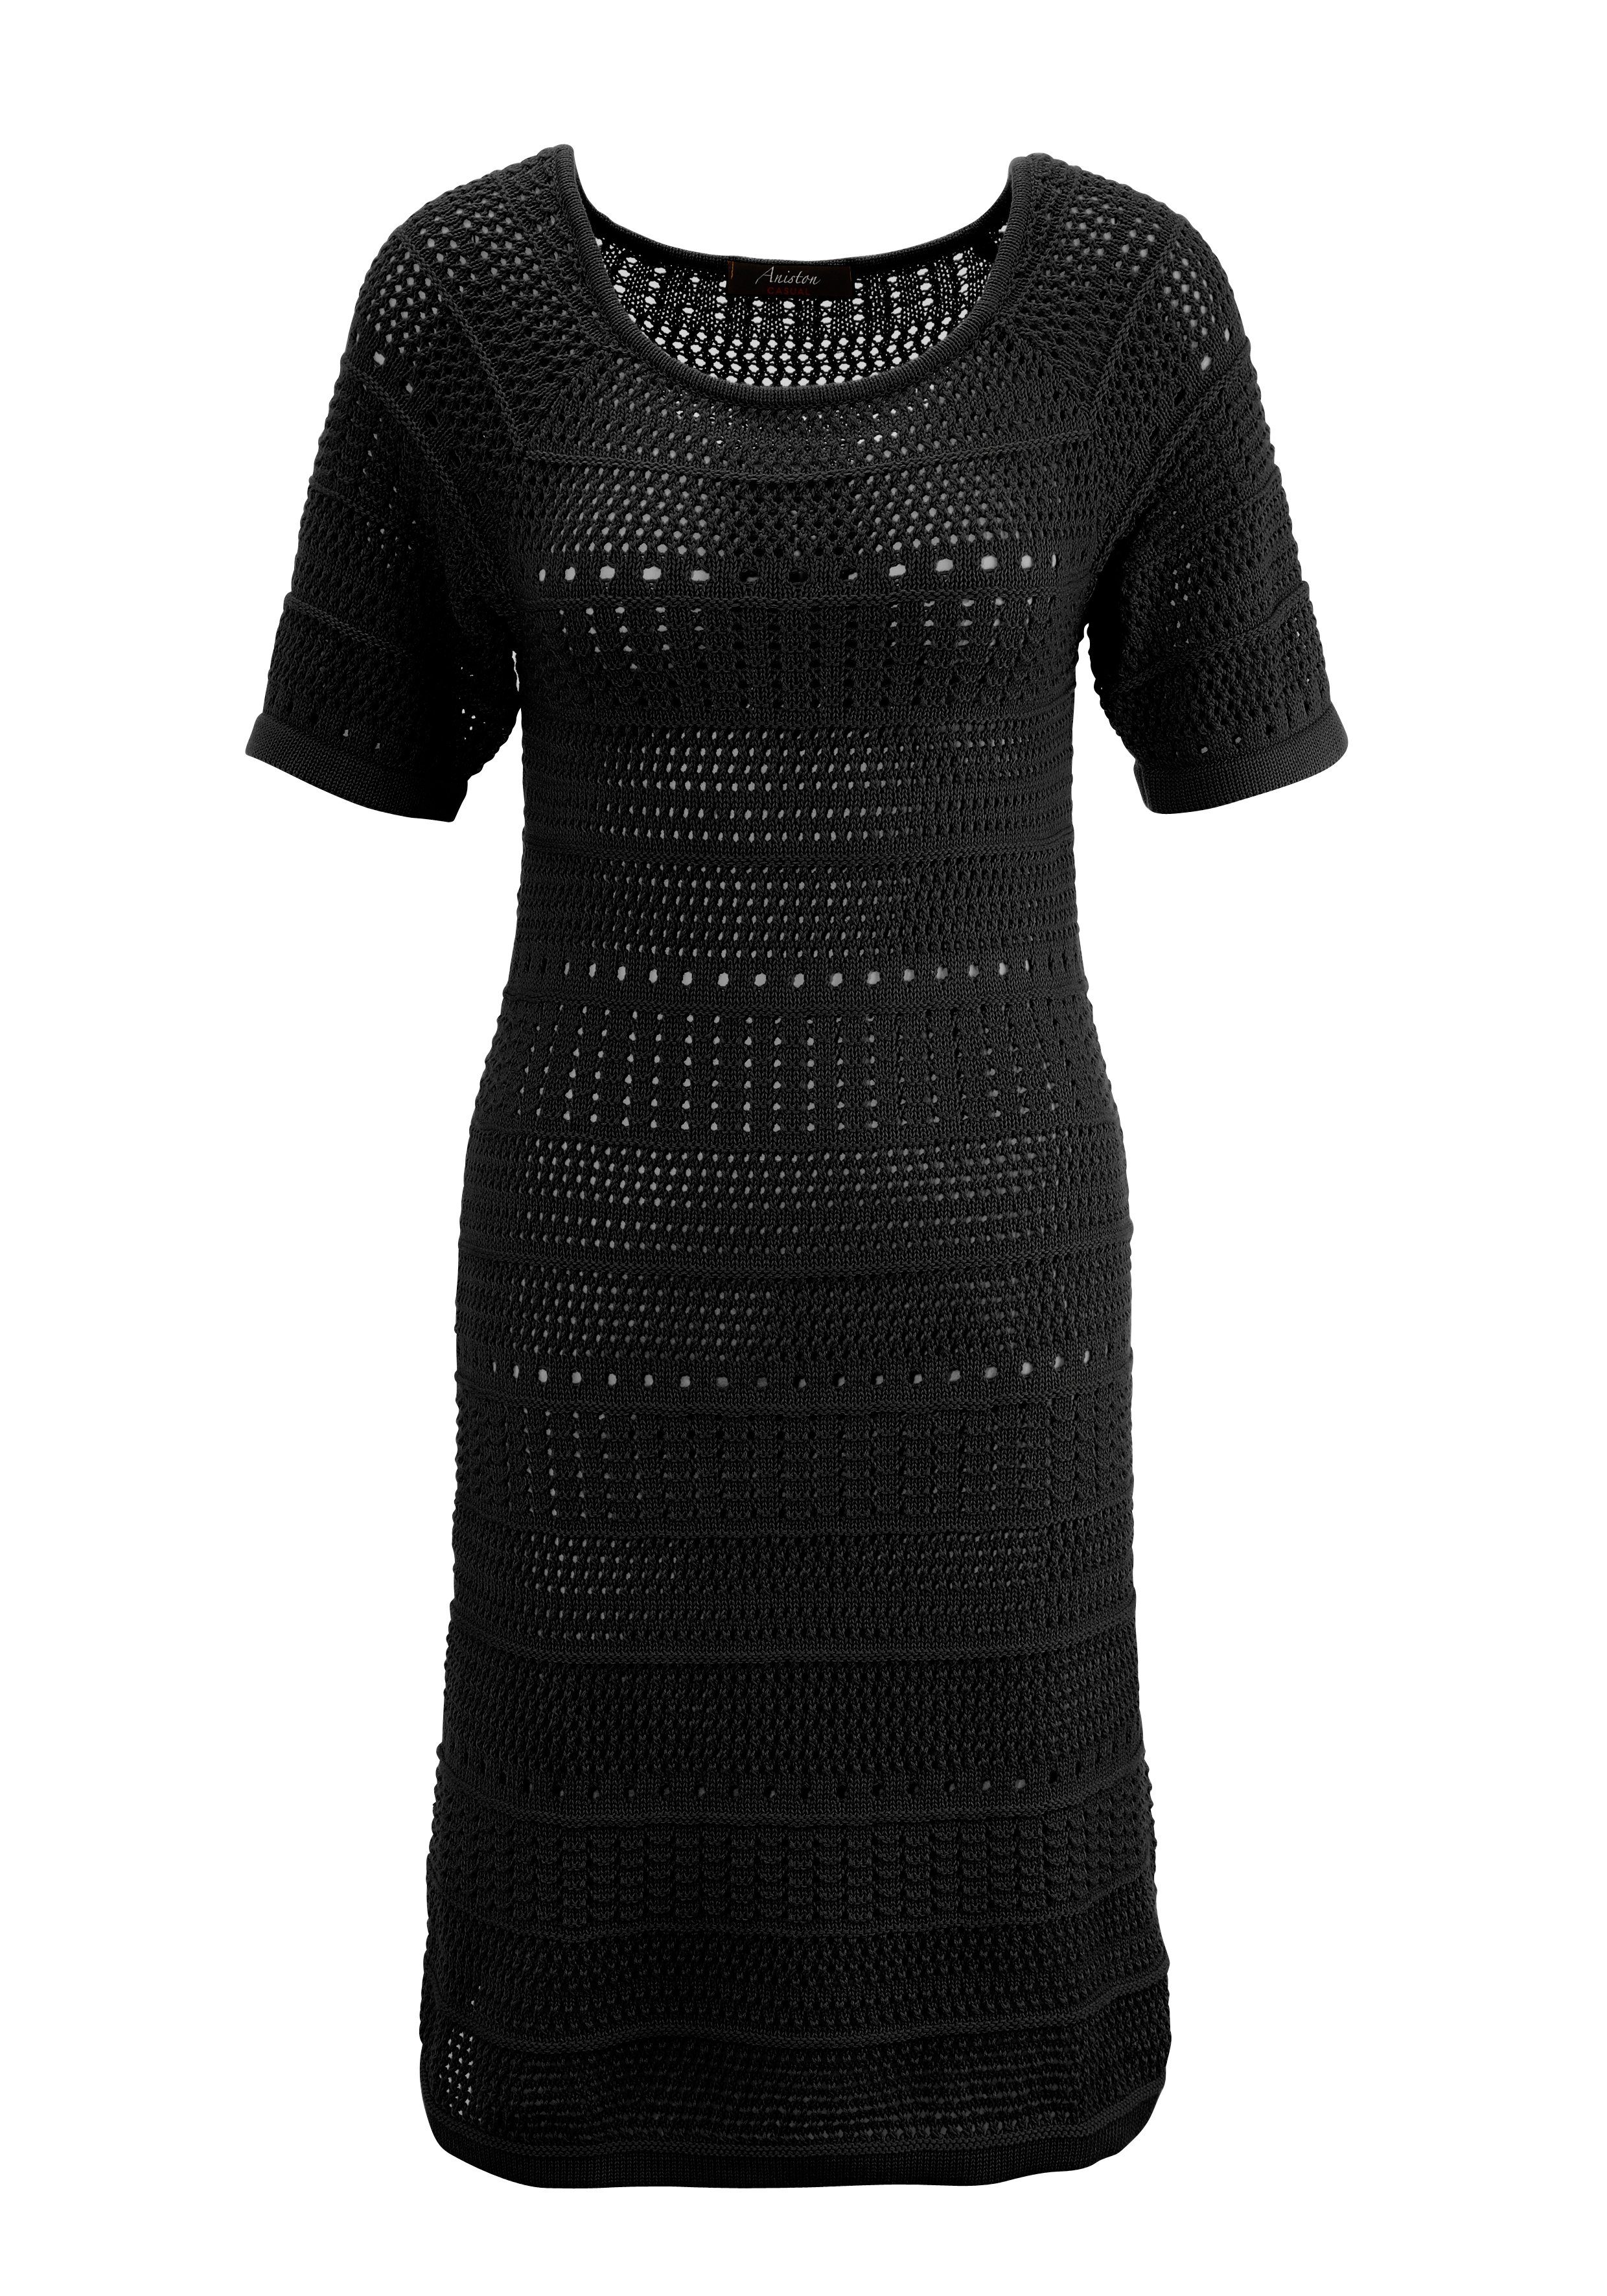 Aniston CASUAL Gebreide jurk in ajourmotief-mix nieuwe collectie